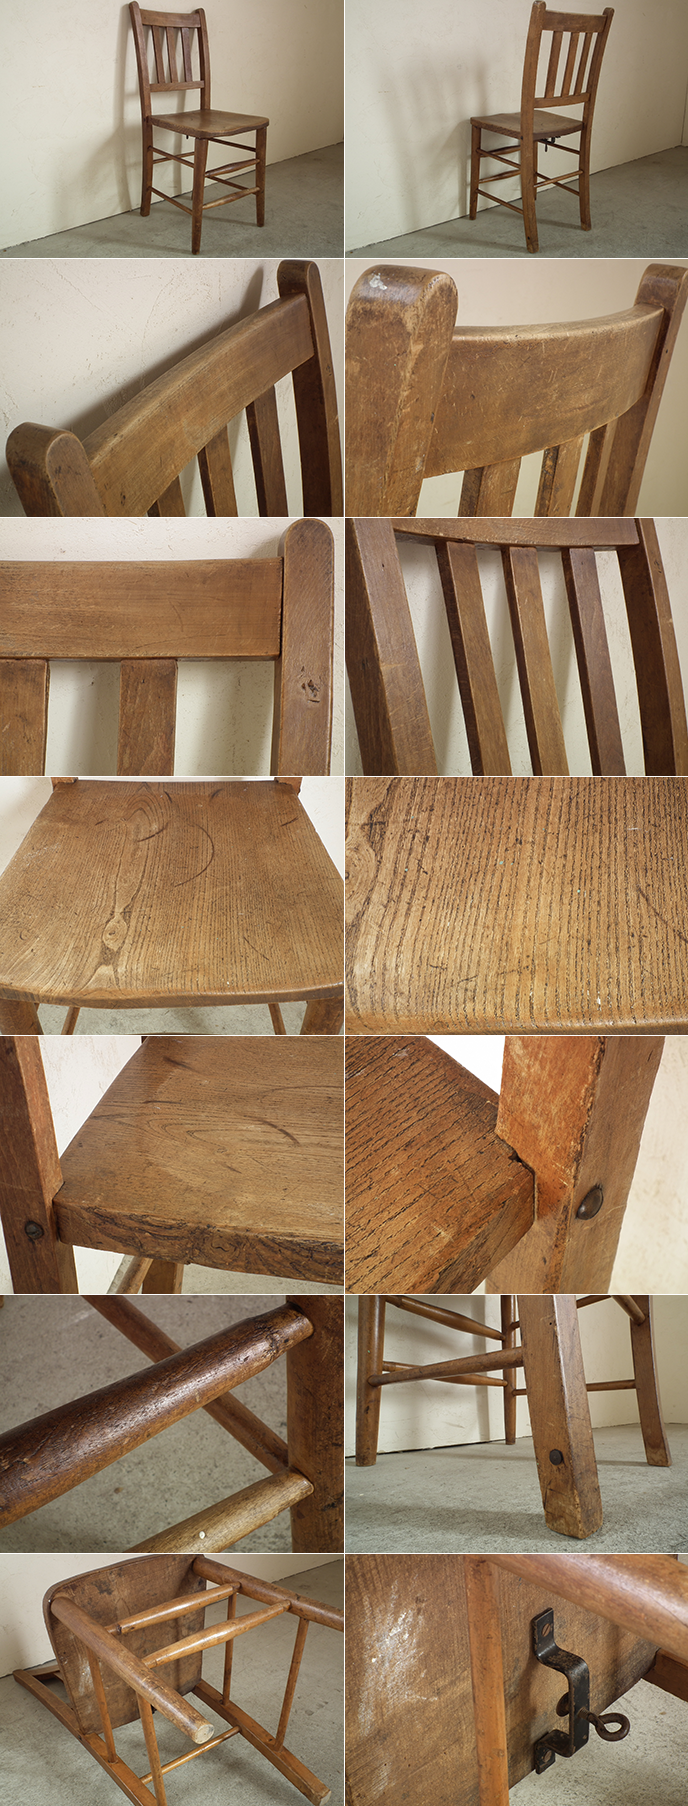 B00254 イギリスアンティーク チャーチチェア 古い教会の木製椅子 